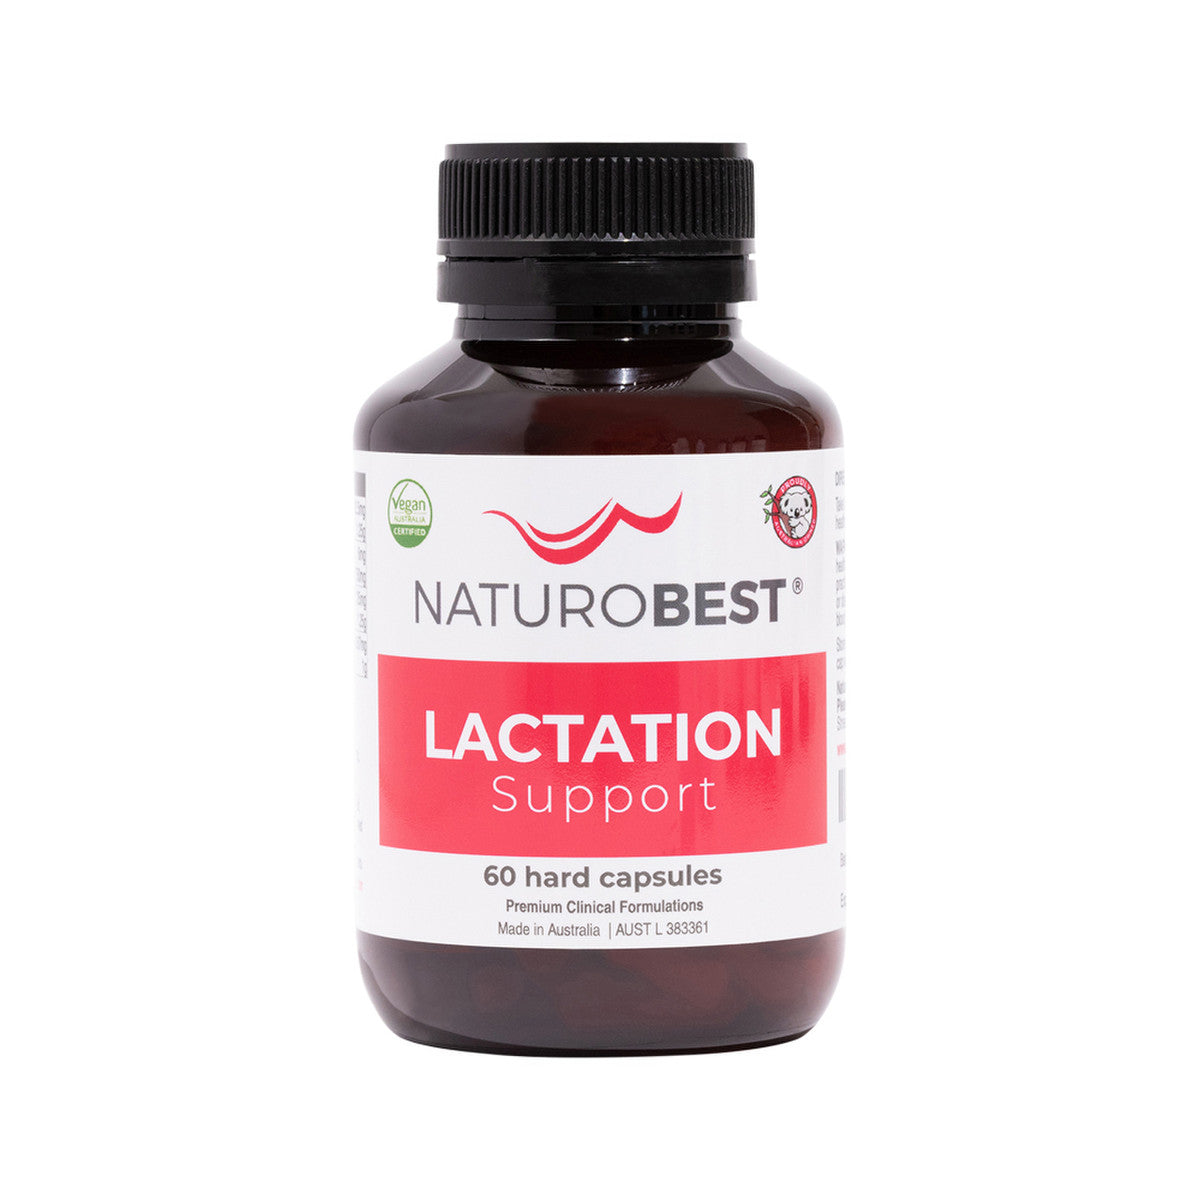 NaturoBest - Lactation Support